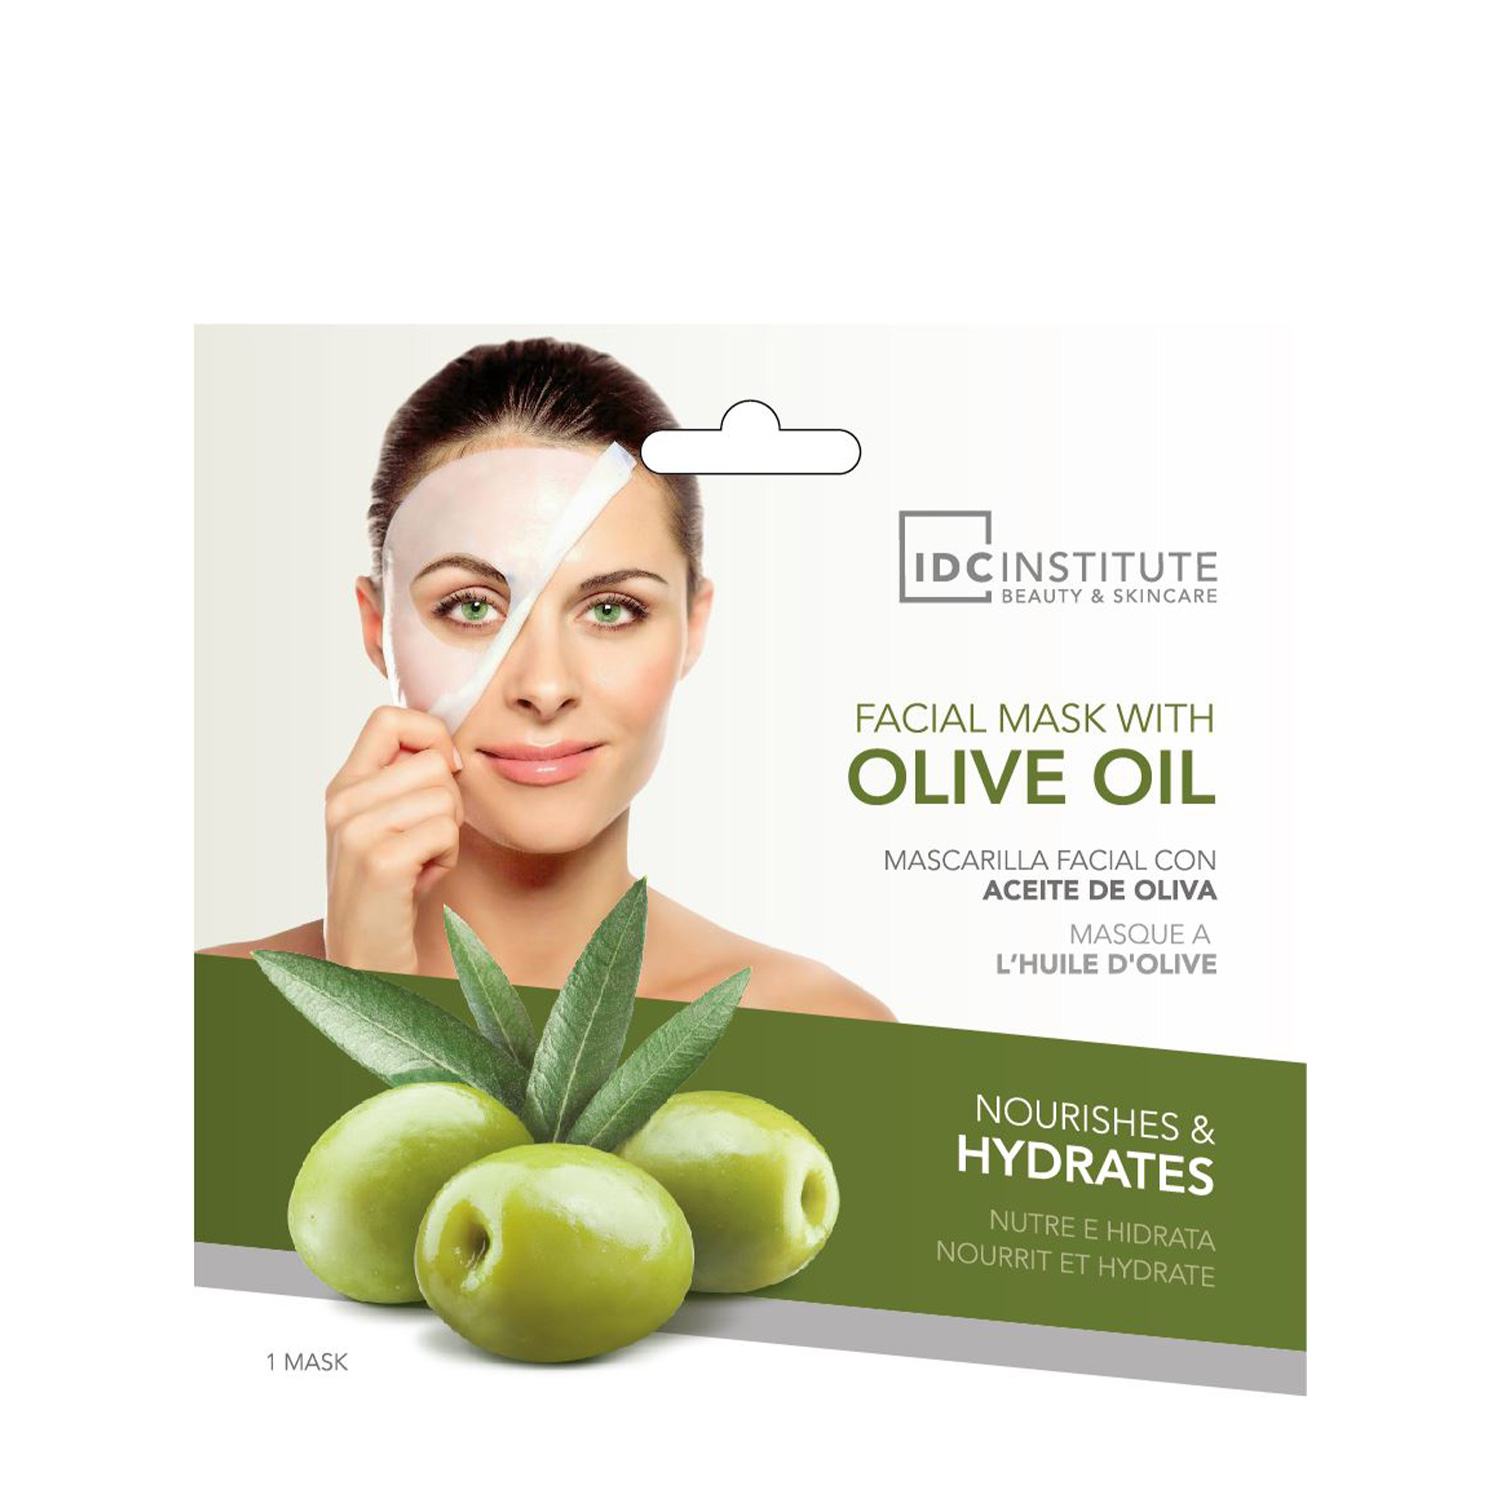 Mascarilla facial con aceite de oliva